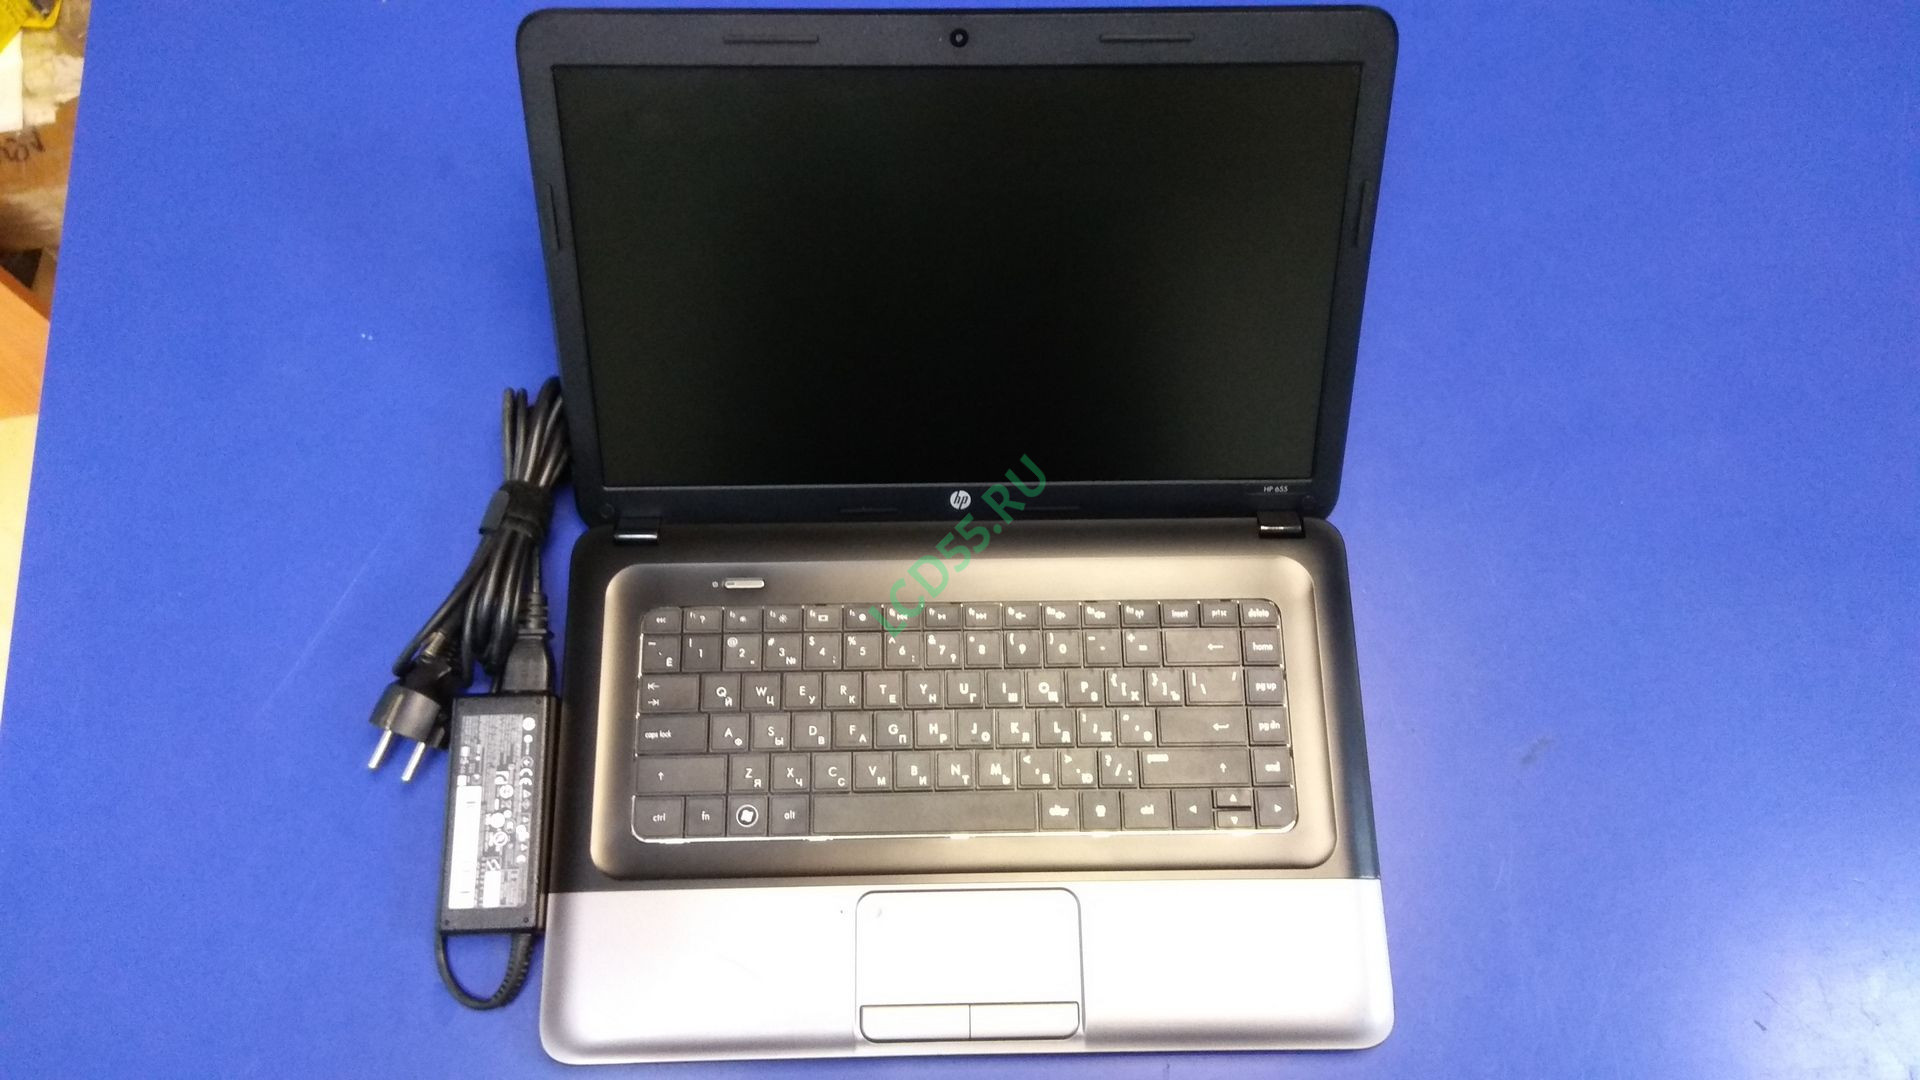 Ноутбук HP 655 б/у